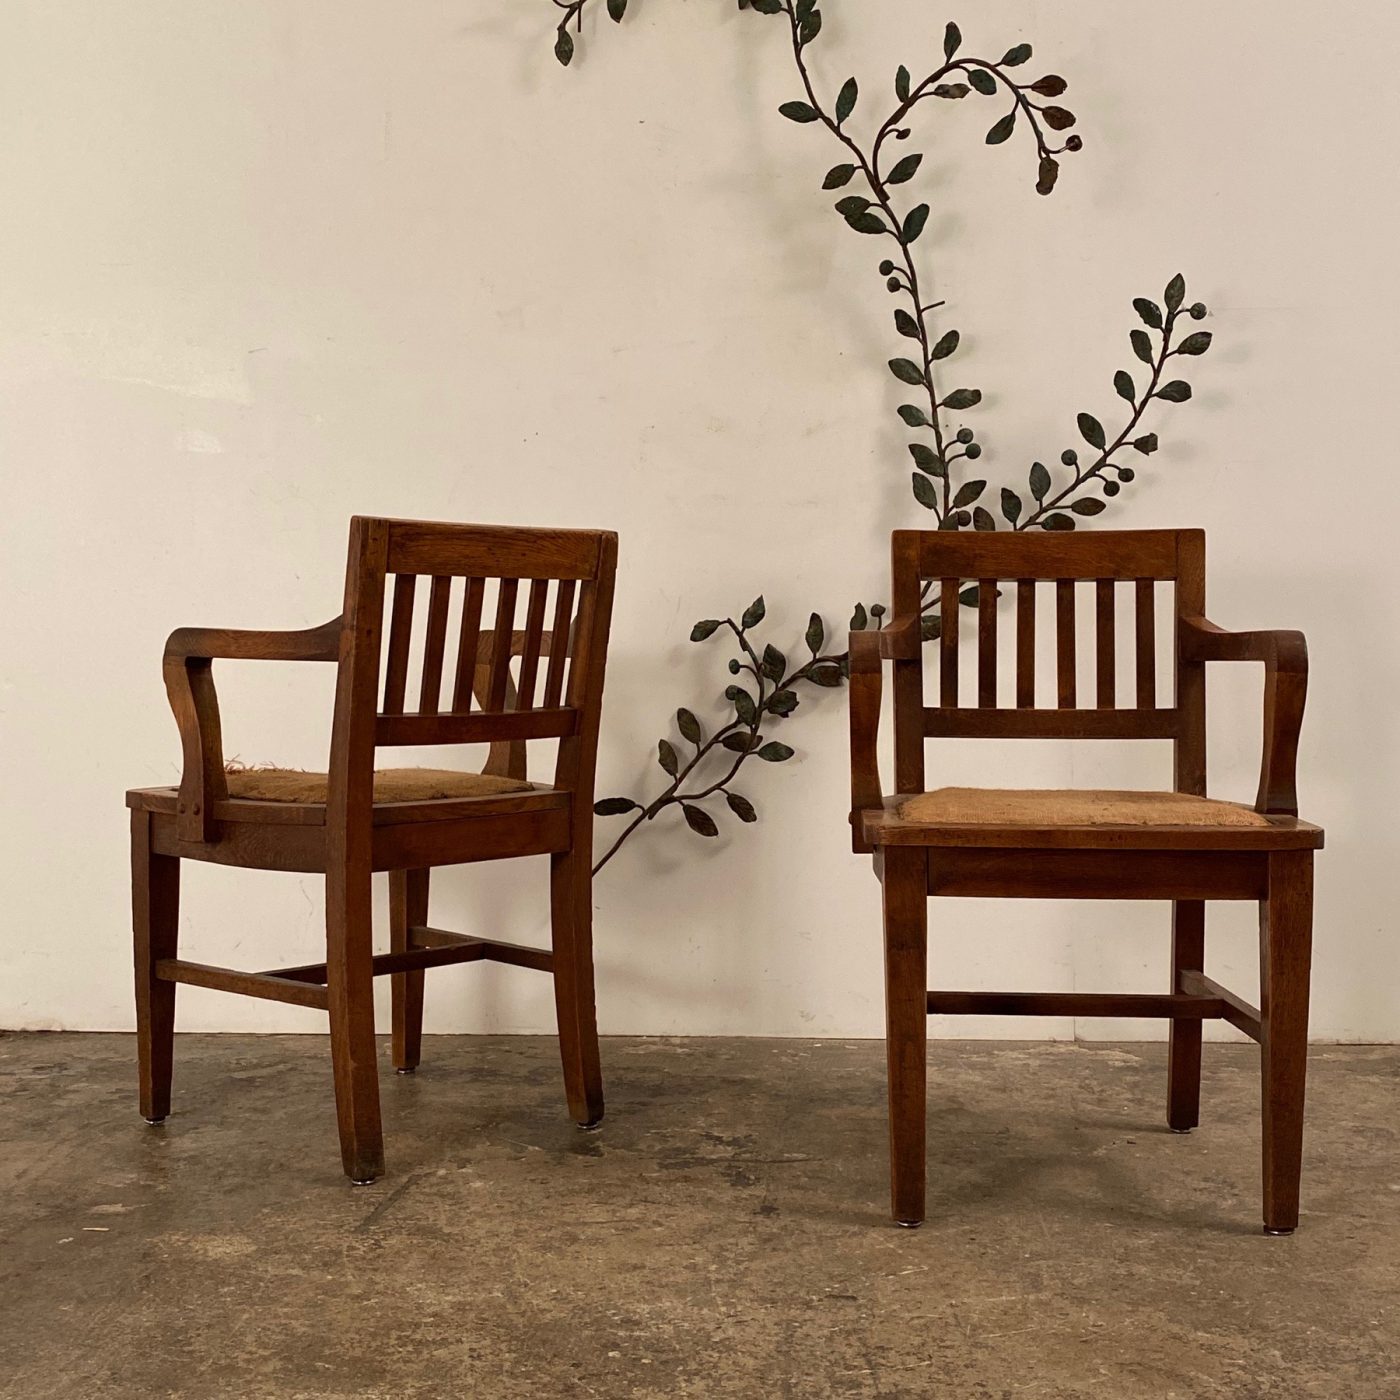 objet-vagabond-oak-chairs0005